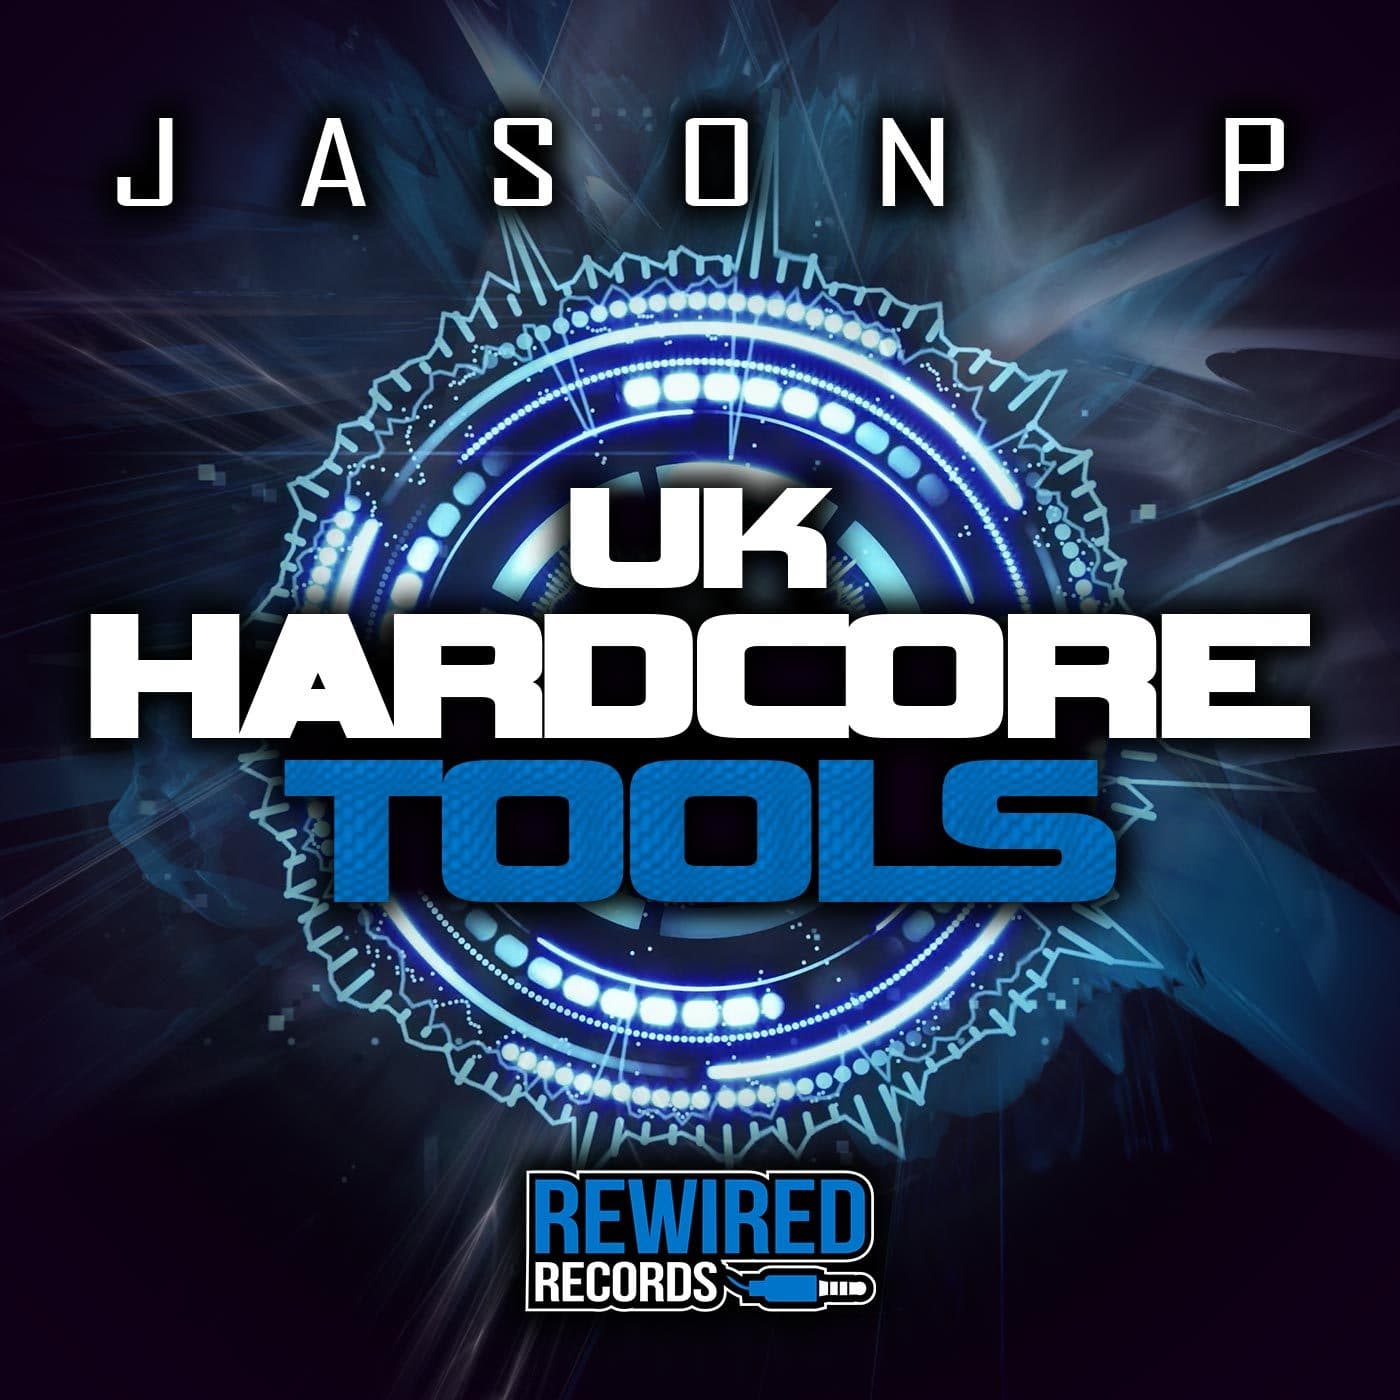 Jason P - UK Hardcore Tools Vol 1 - Rewired Records